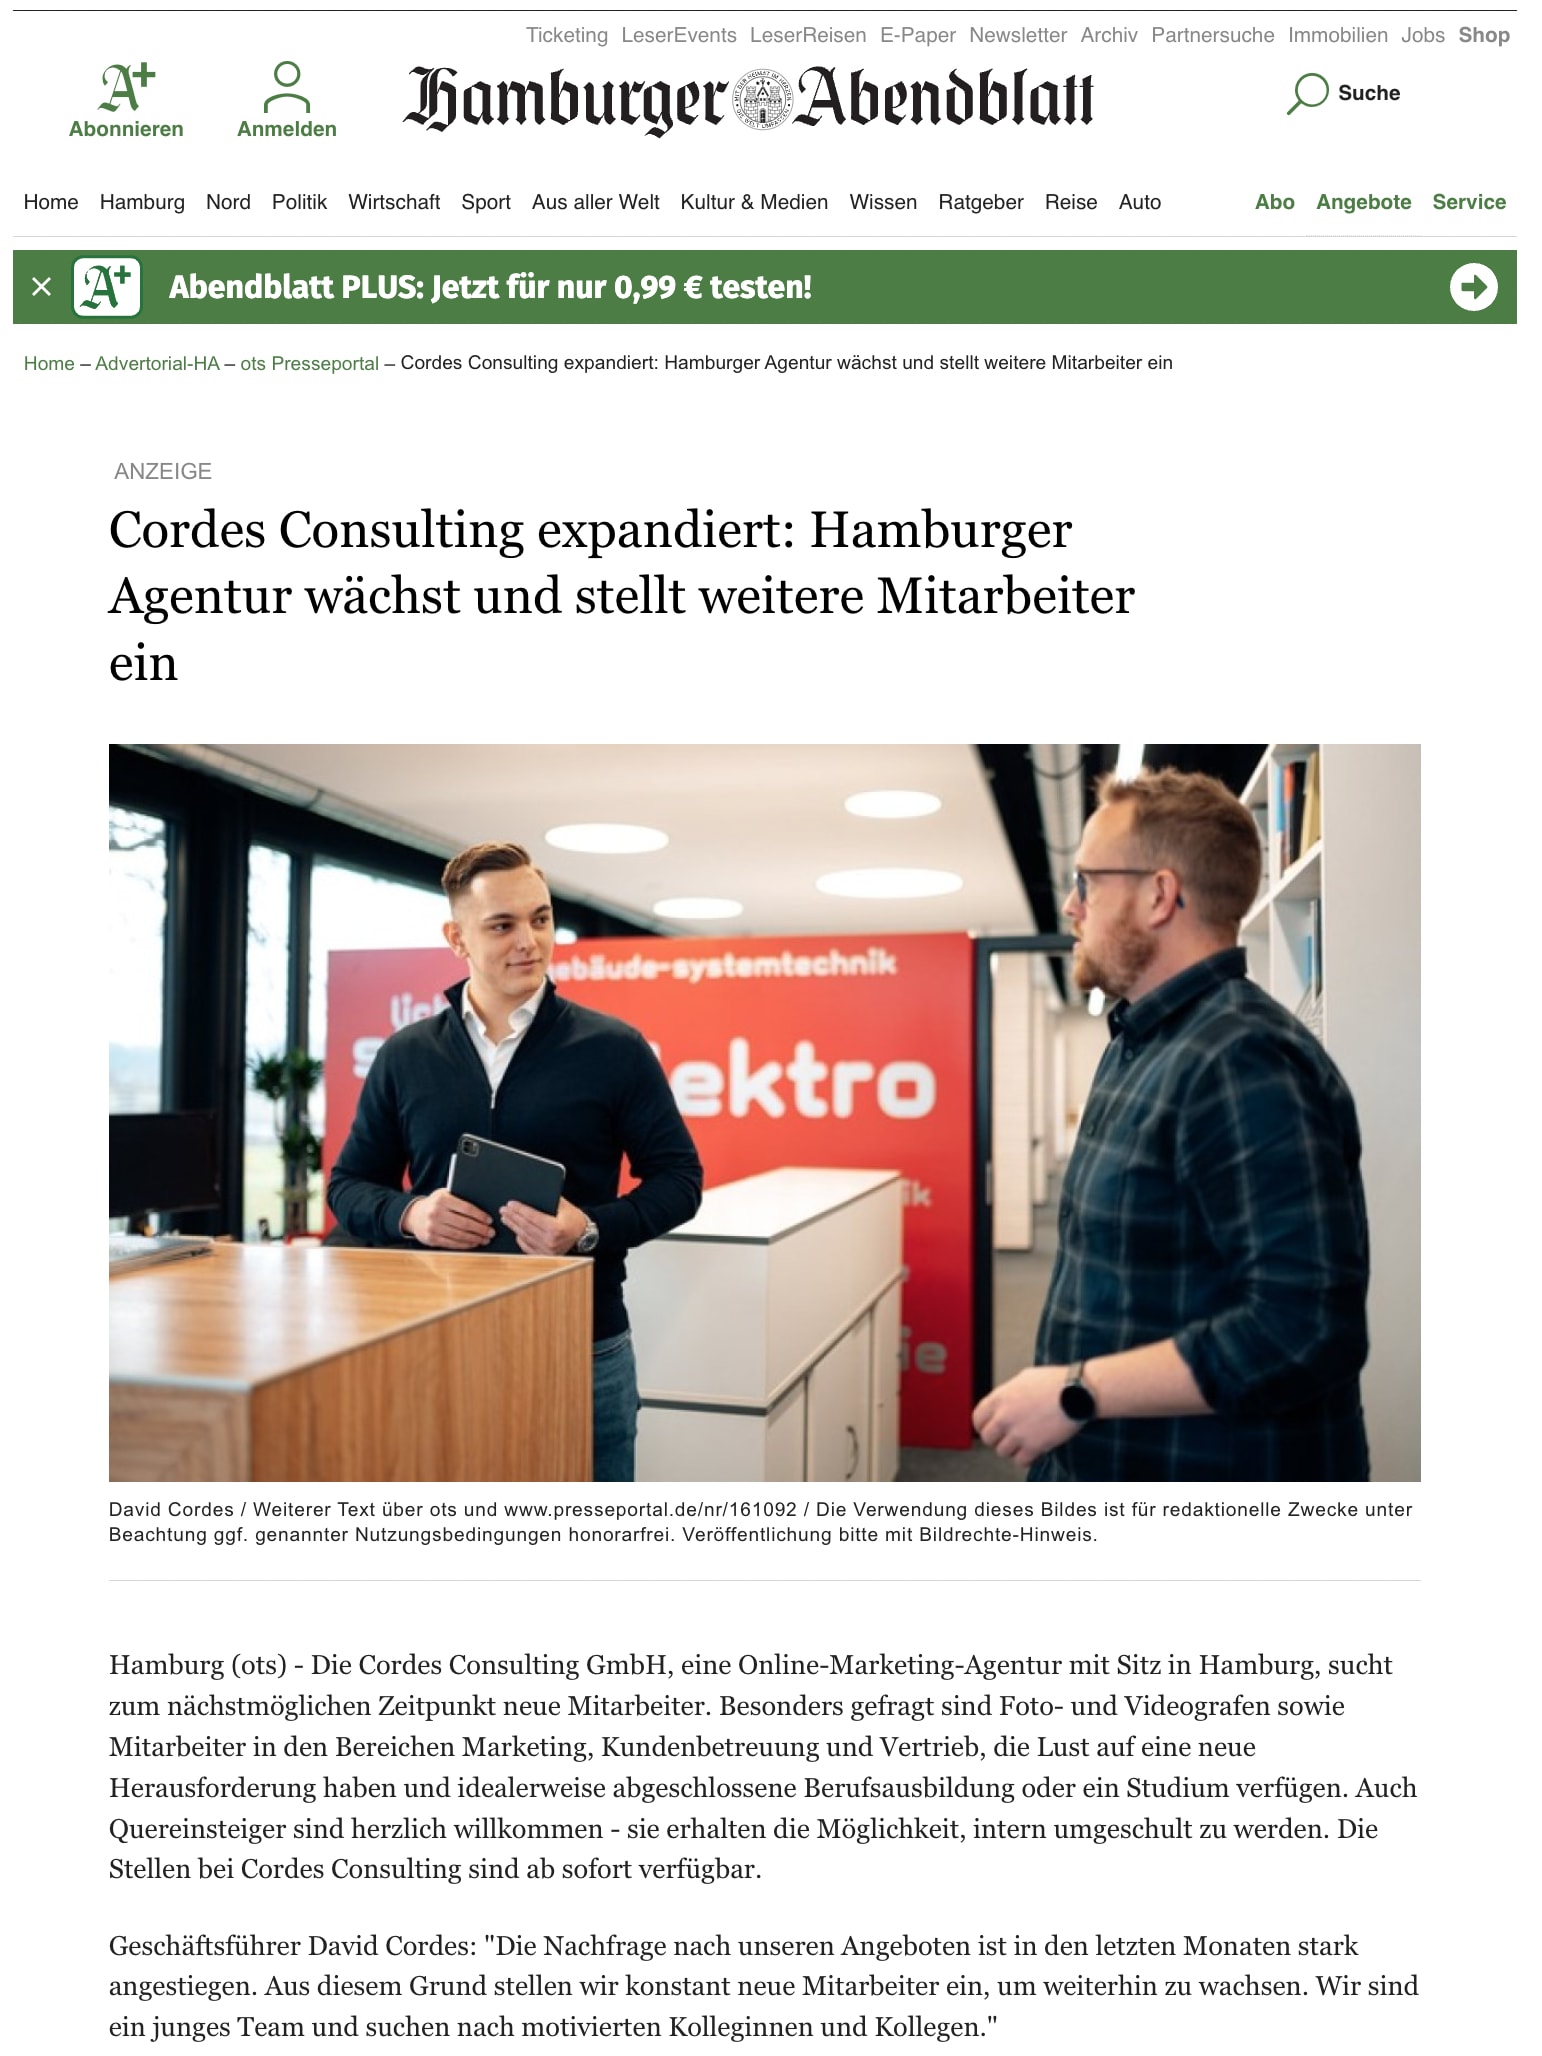 Cordes_Consulting_abendblatt